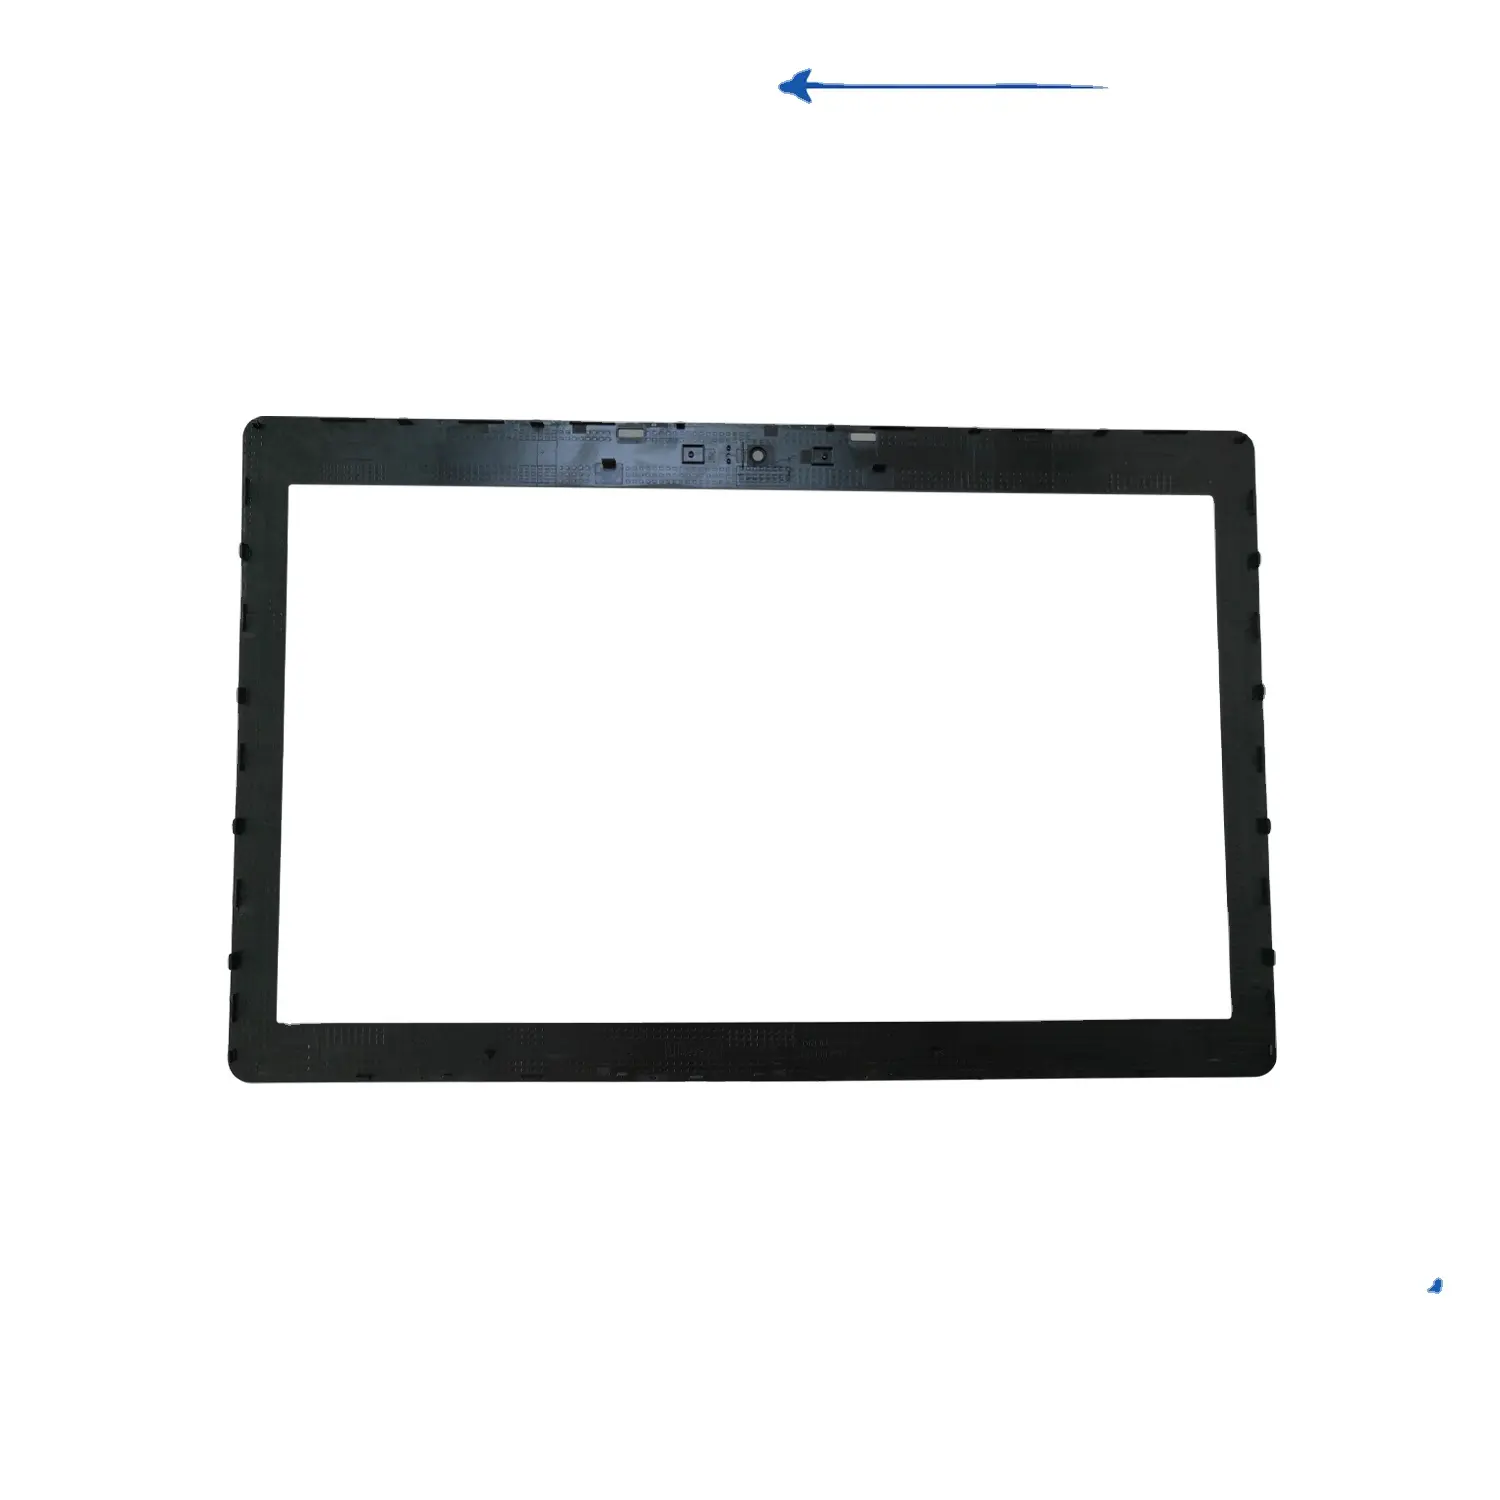 Ersatz-Notebook-B-Abdeckung mit Kamera loch für E5470 E6420 E6430 E6440 E6520 E6530 E7440 E7470 Front blende für Laptop-Bildschirme